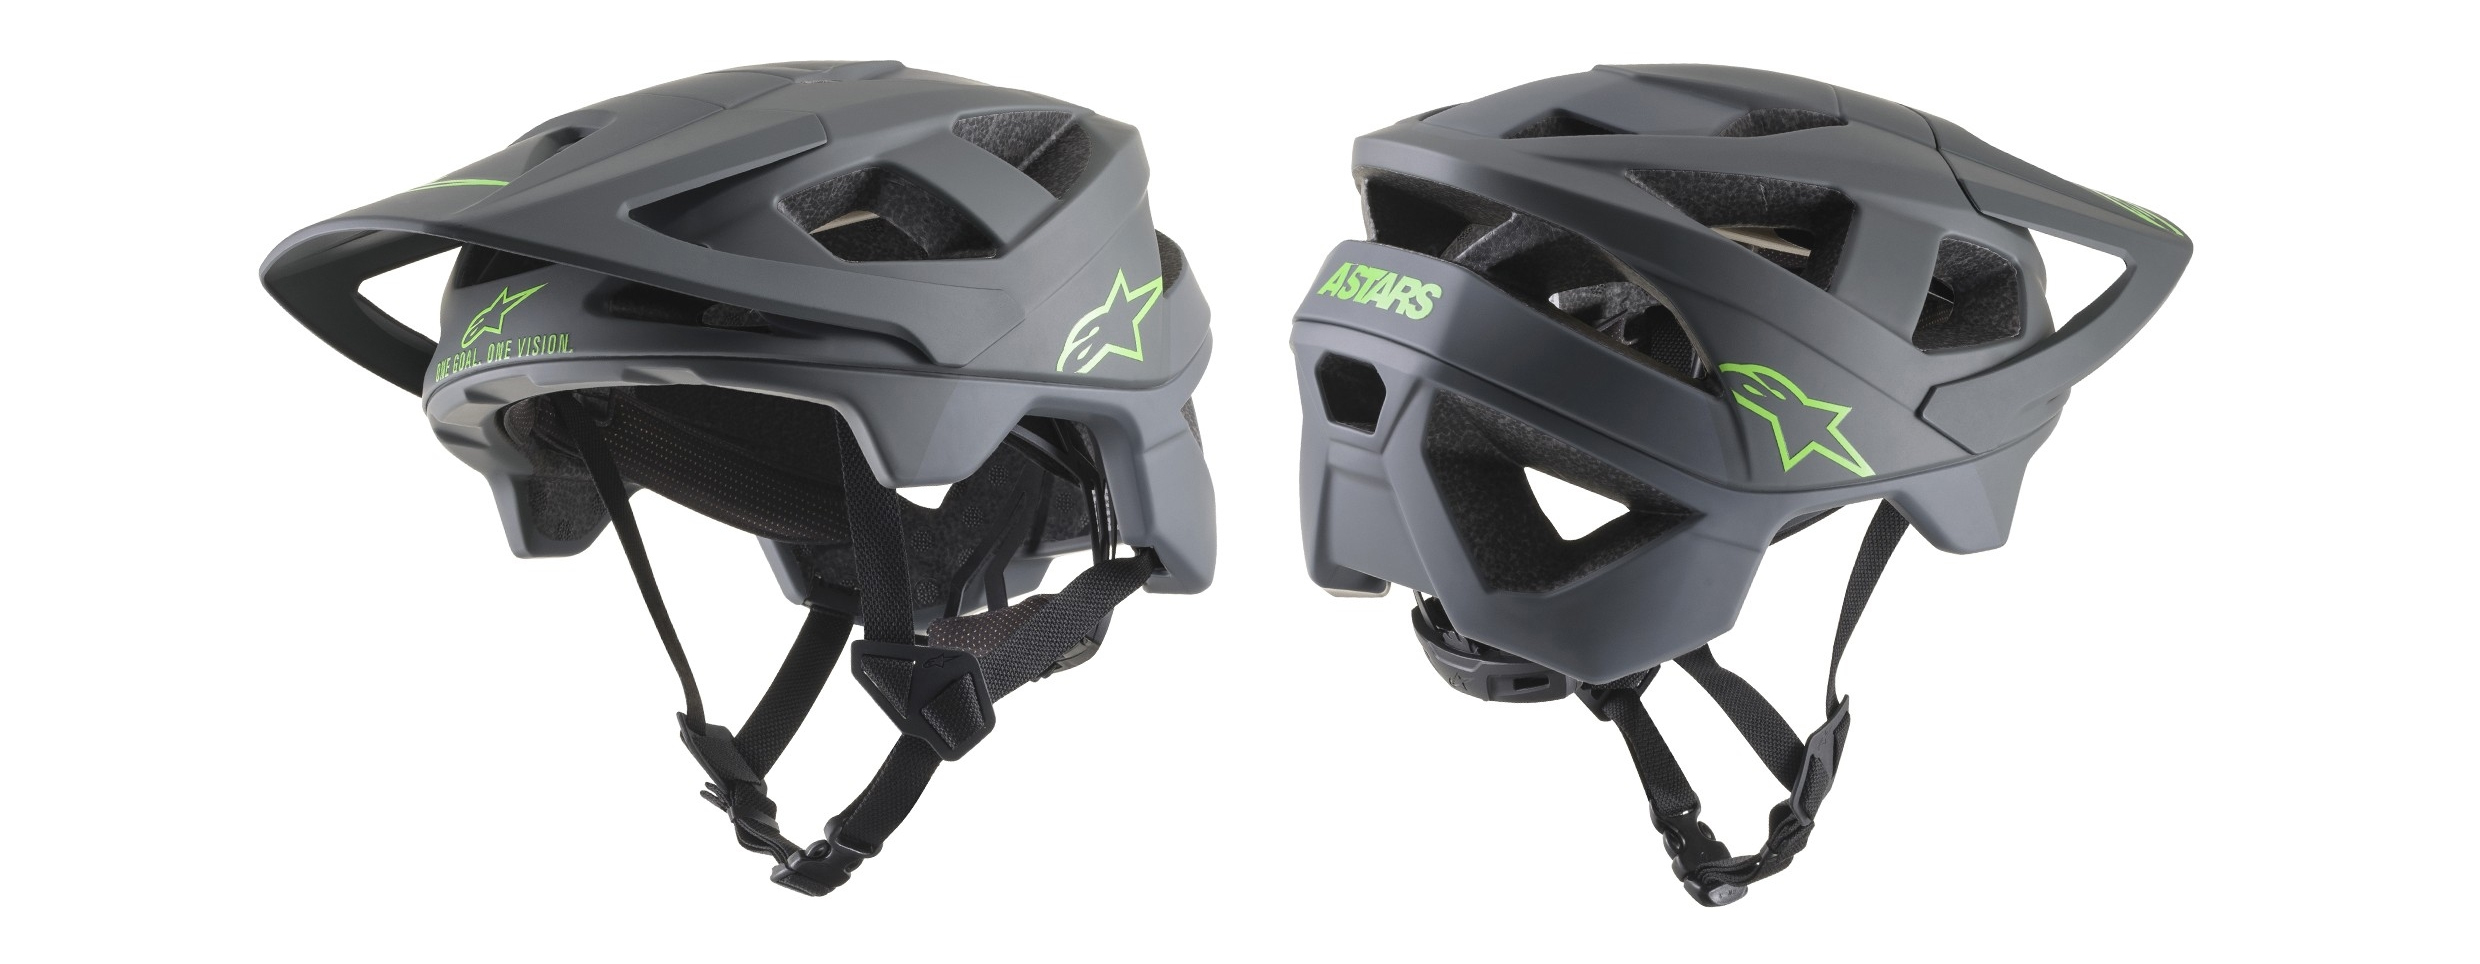 Alpinestars launches the first range of helmets for mountain biking